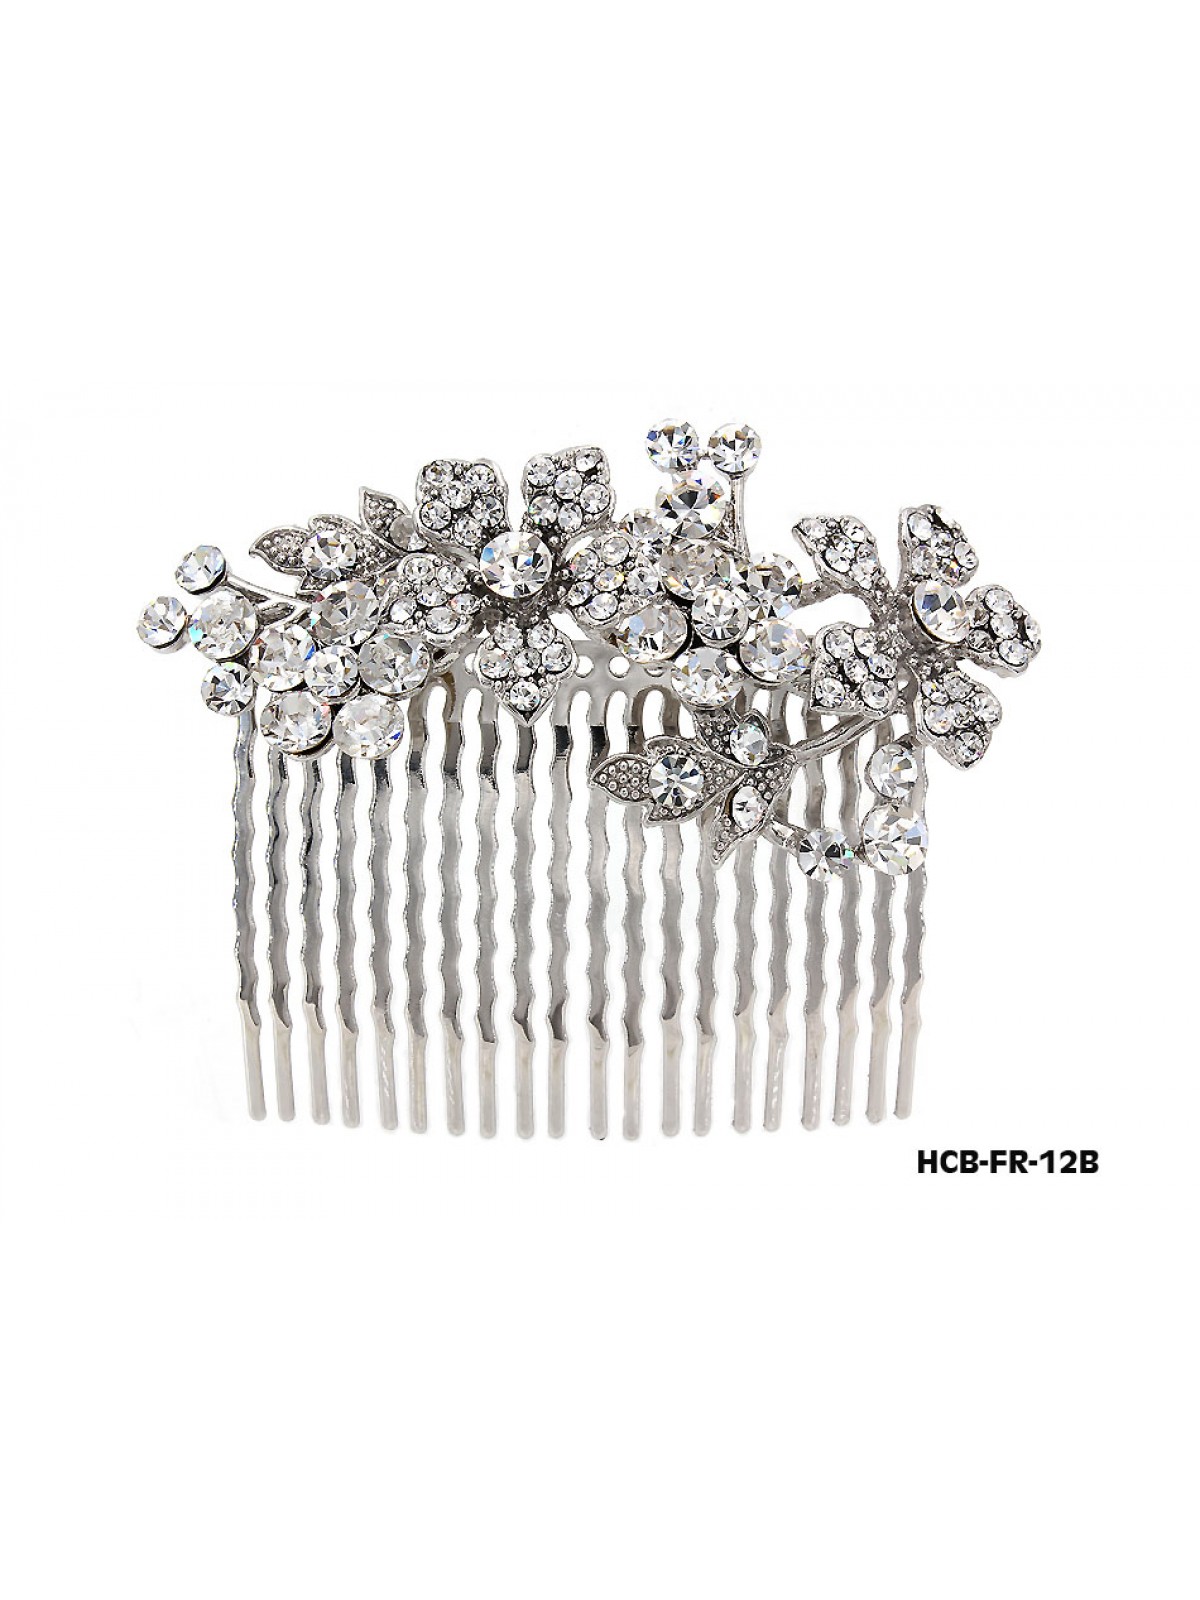 Hair Comb – Bridal Hair Combs & Clips w/ Austrian Crystal Stones Flowers - HCB-FR-12B